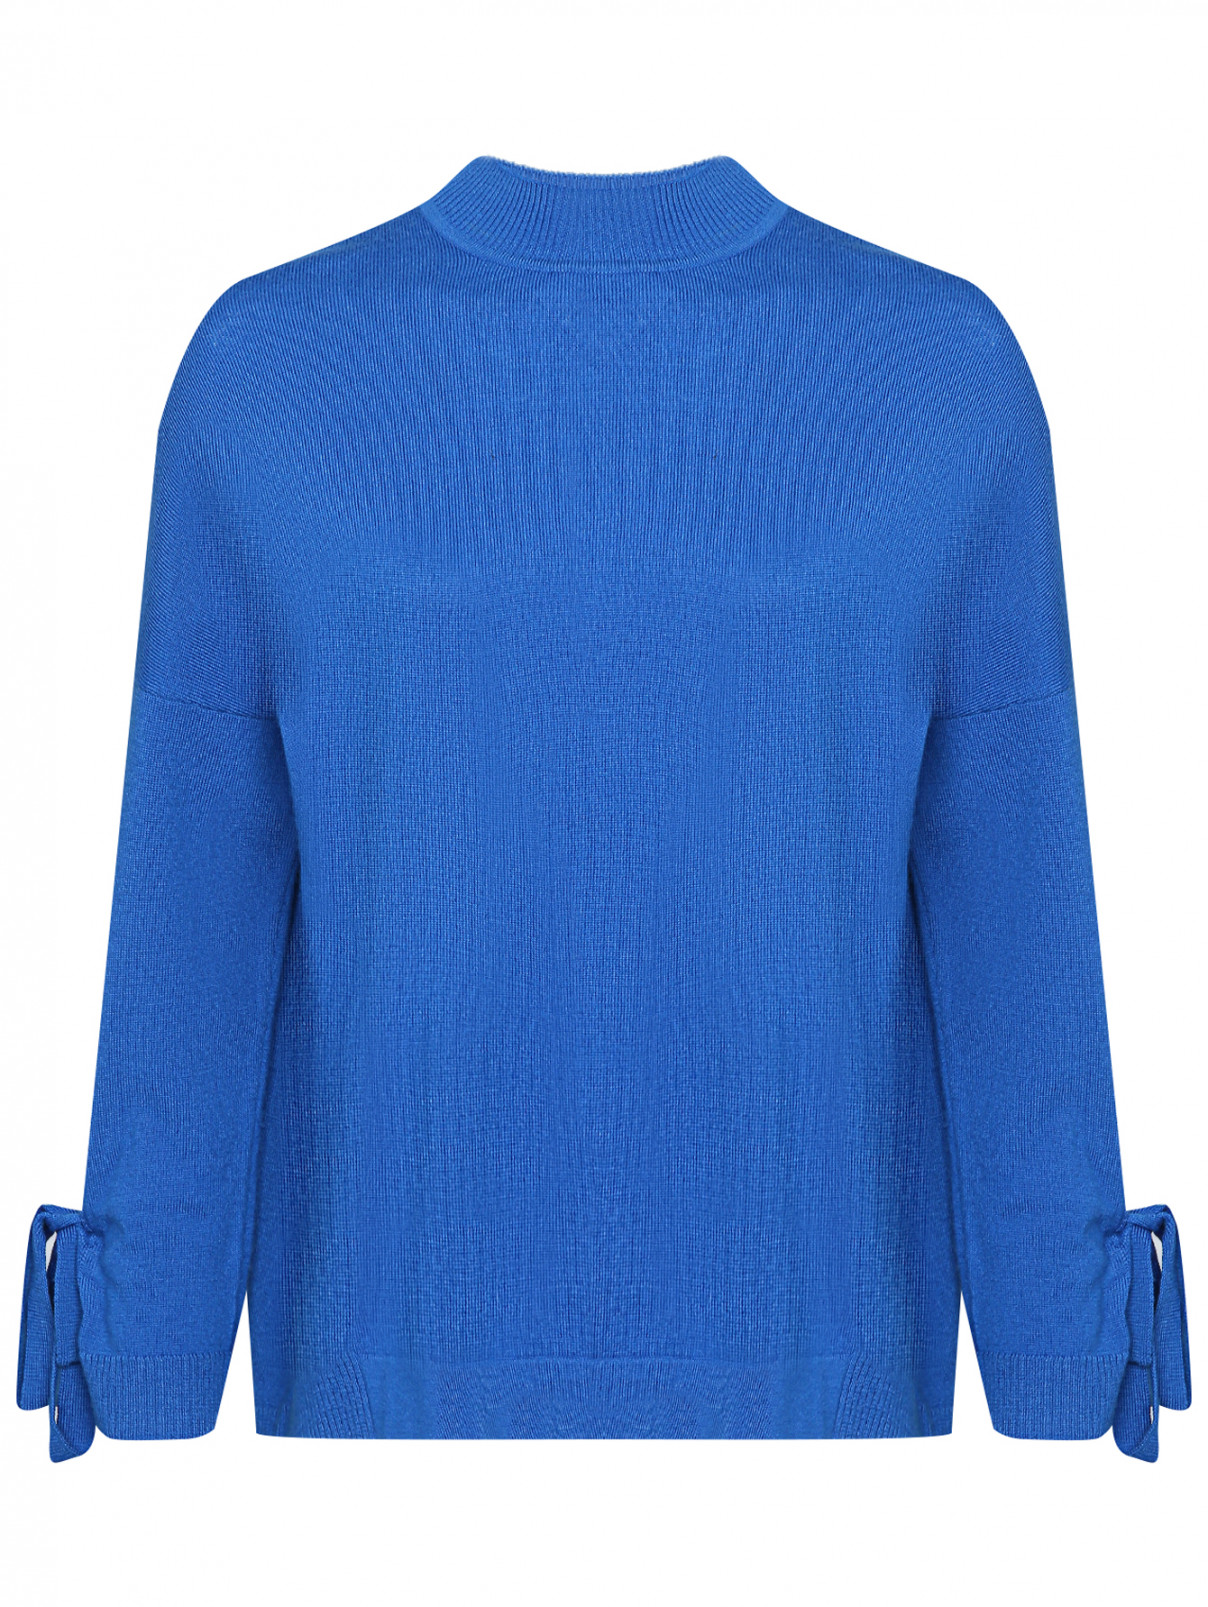 Джемпер свободного кроя с разрезами на рукавах Max&Co  –  Общий вид  – Цвет:  Синий